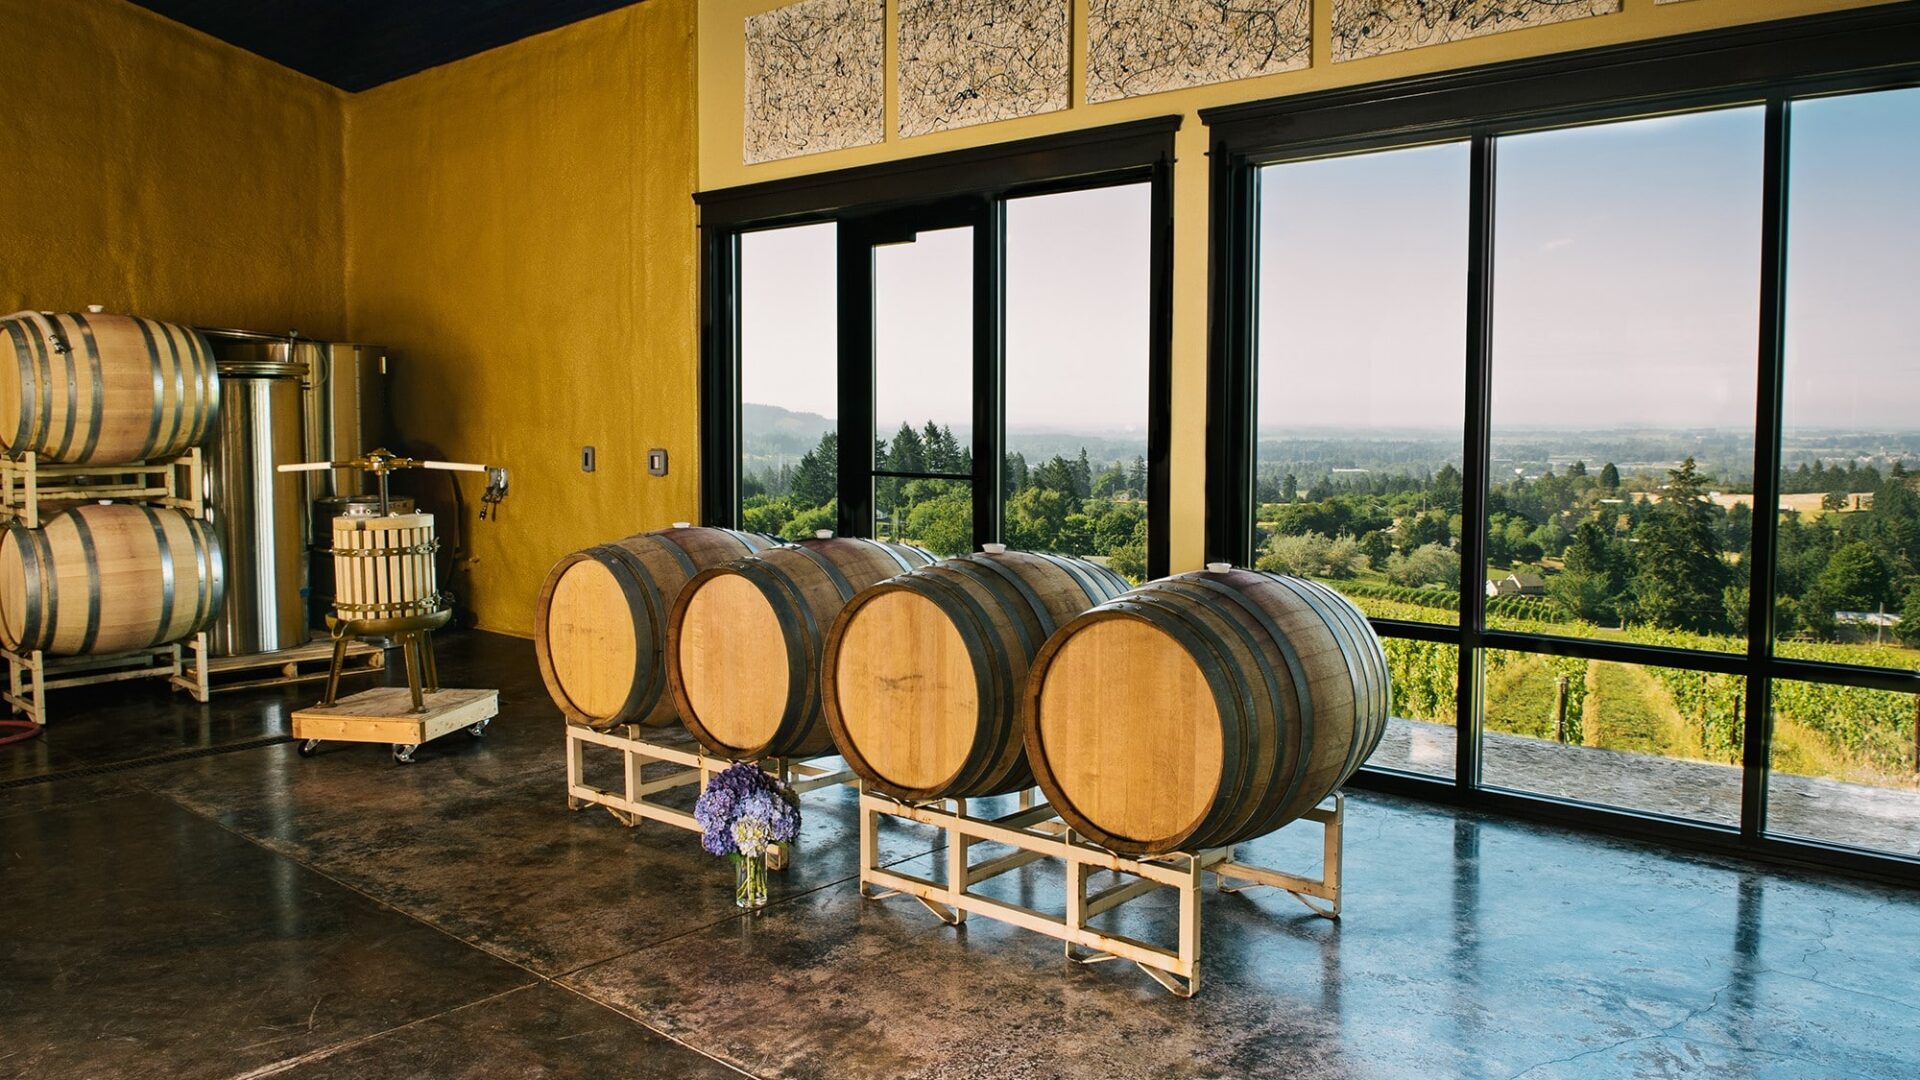 Bells Up Winery wine vats